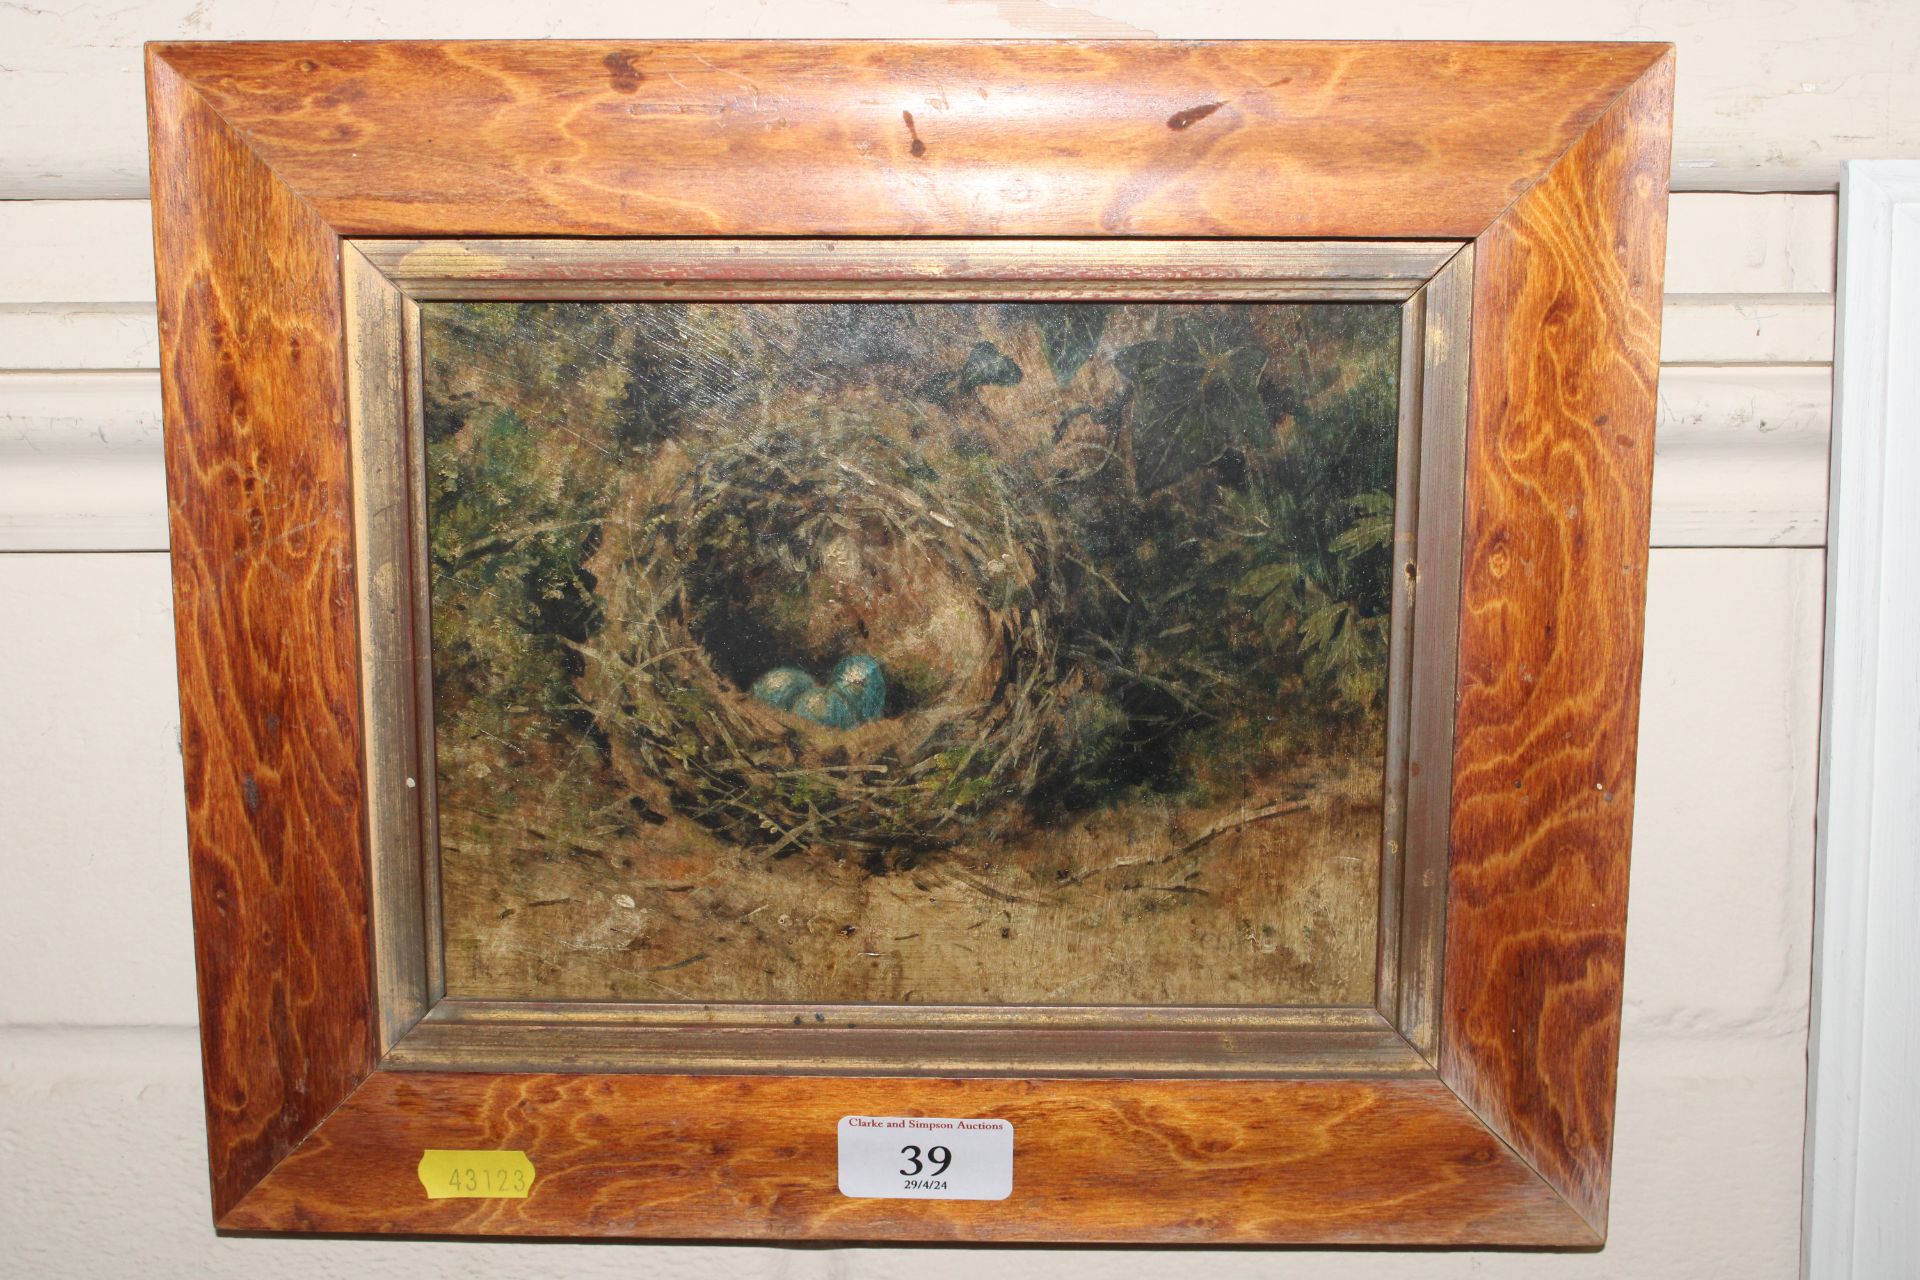 Oil on board study of a bird's nest, signed Clarke